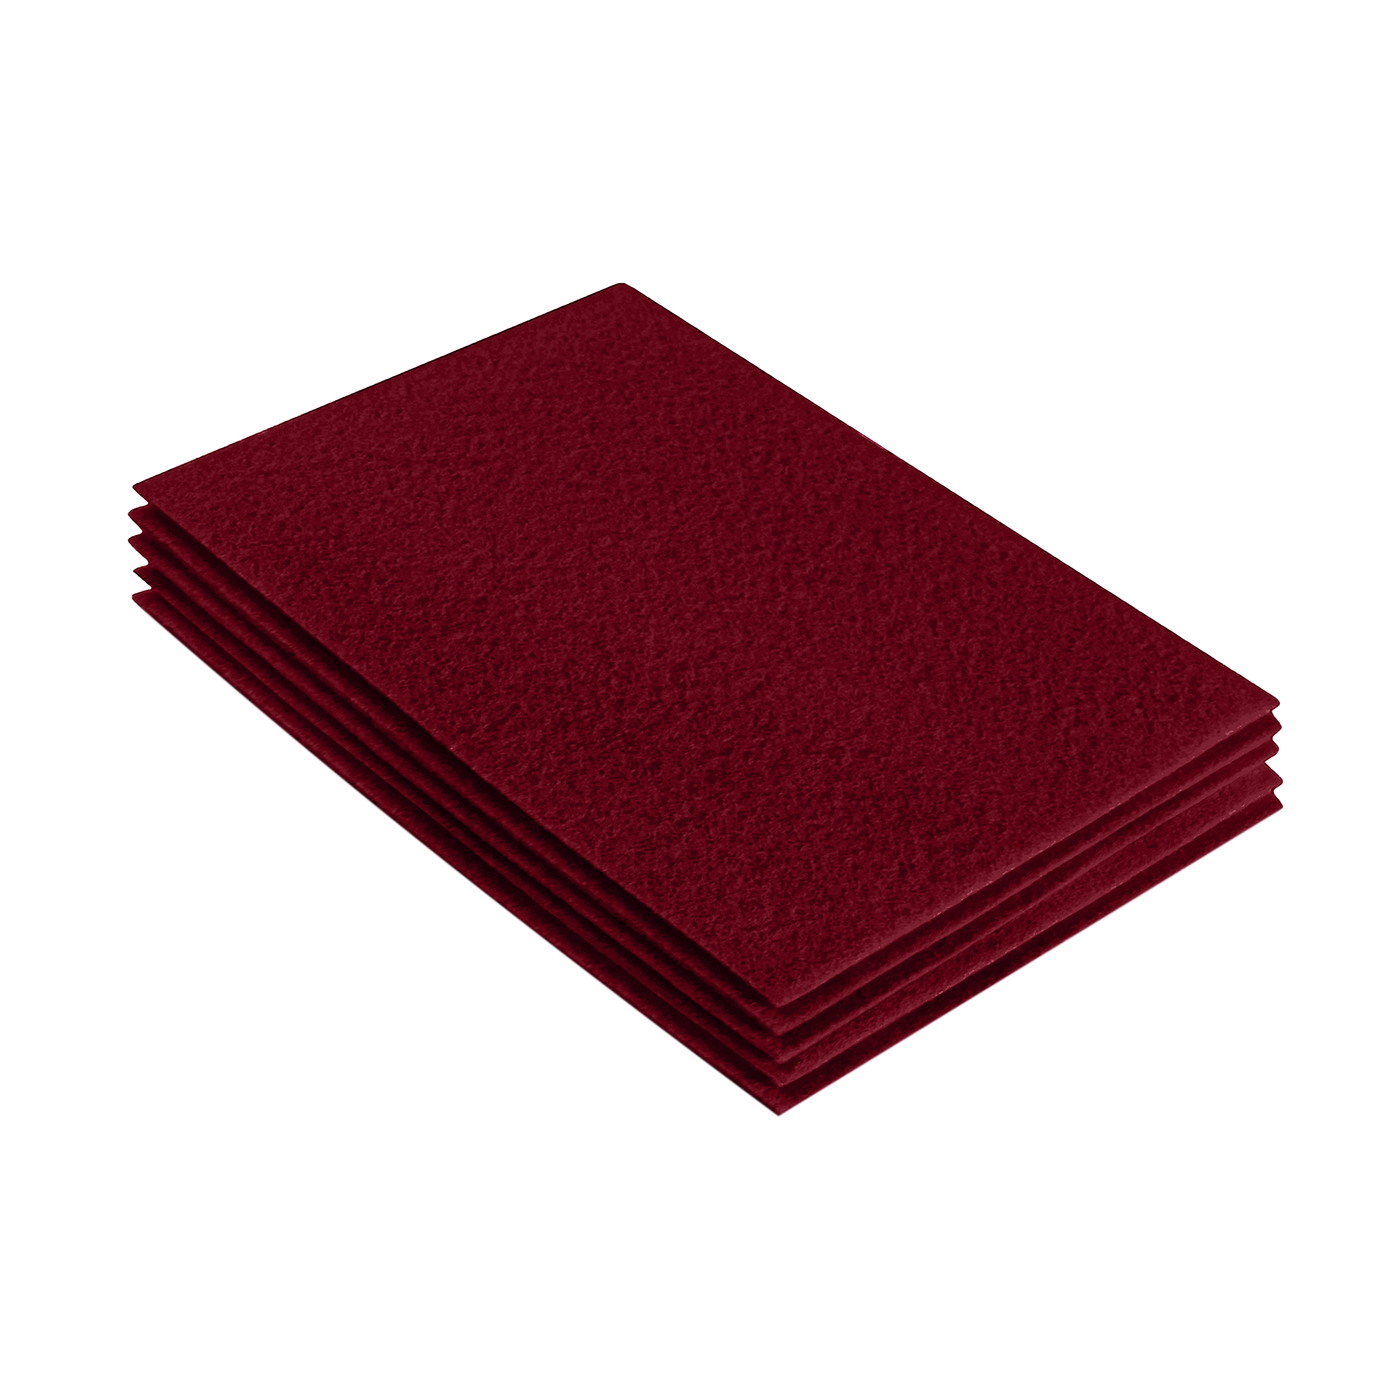 Acrylic Felt 9"X12" Sheet Packs | Dark Red - FabricLA.com